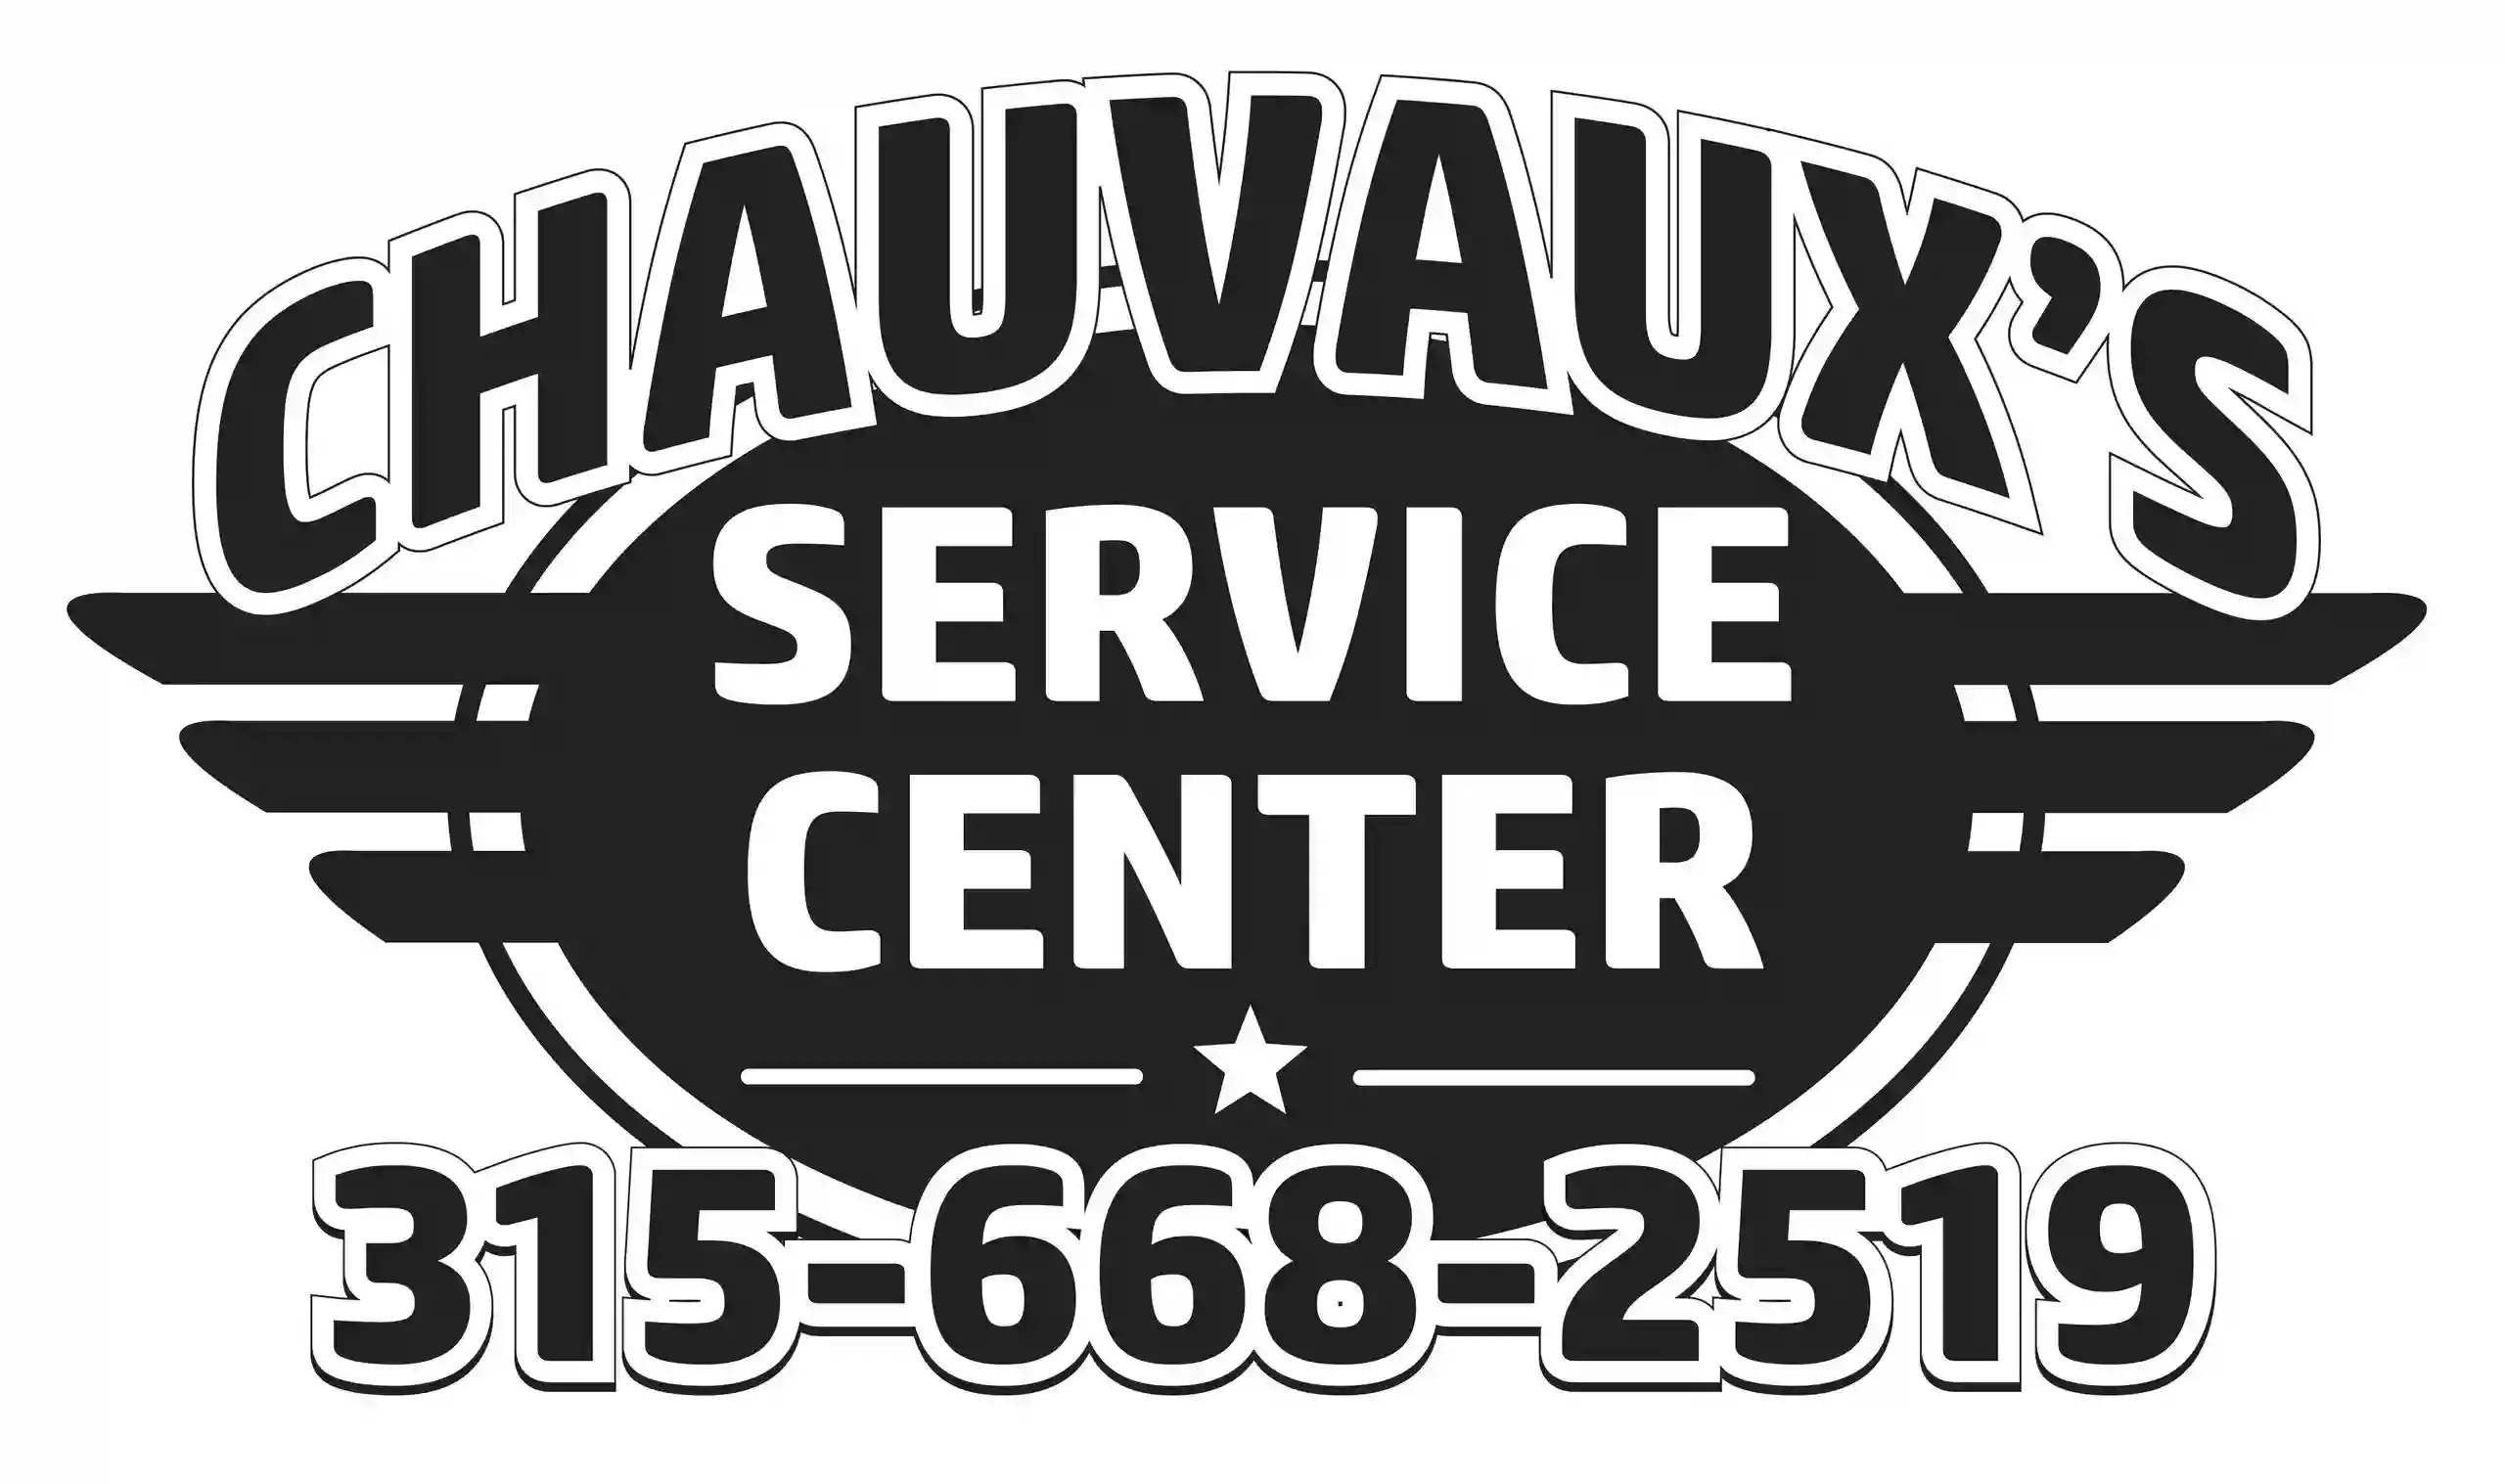 Chauvaux's Service Center